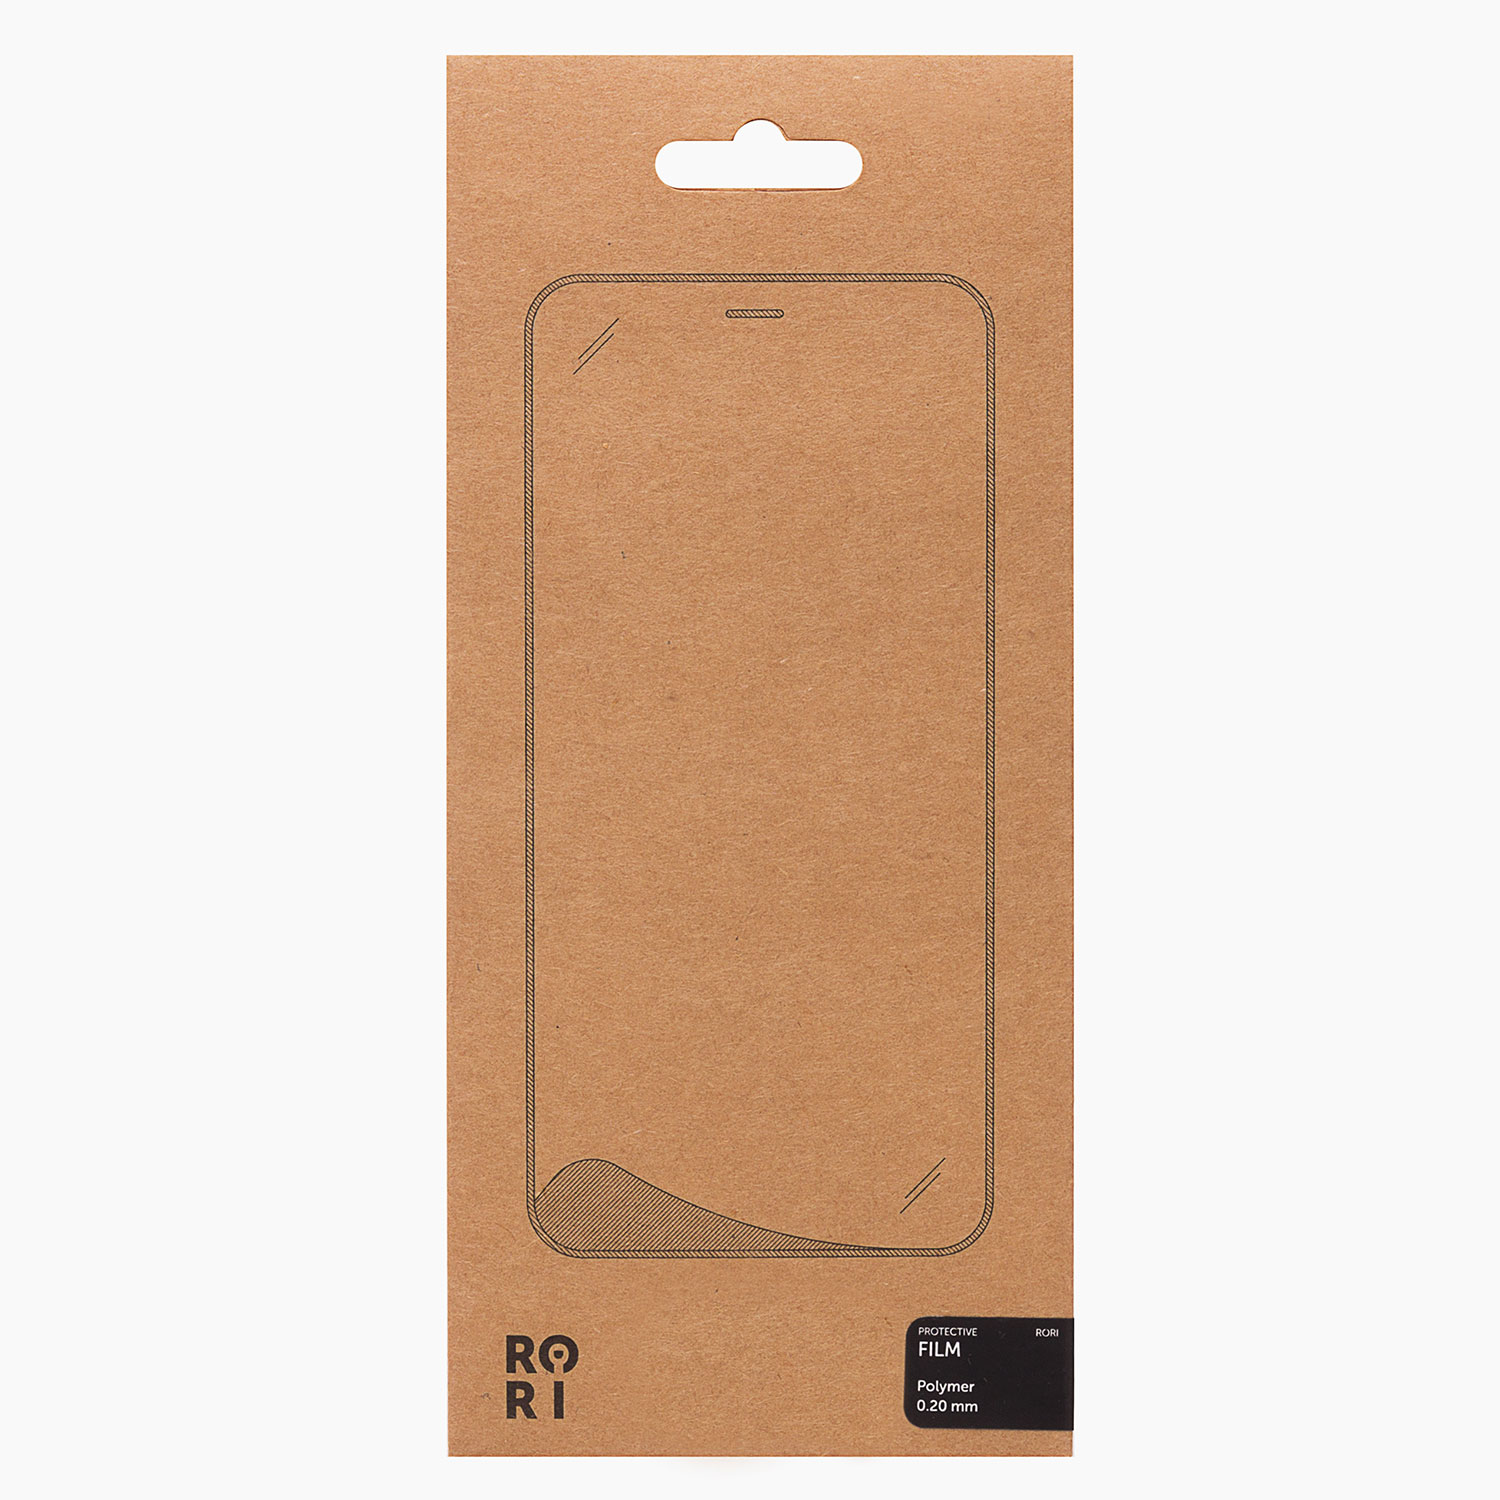 Защитная пленка Rori Polymer для экрана смартфона Samsung SM-A525 Galaxy A52, поверхность матовая, черная рамка (126474)